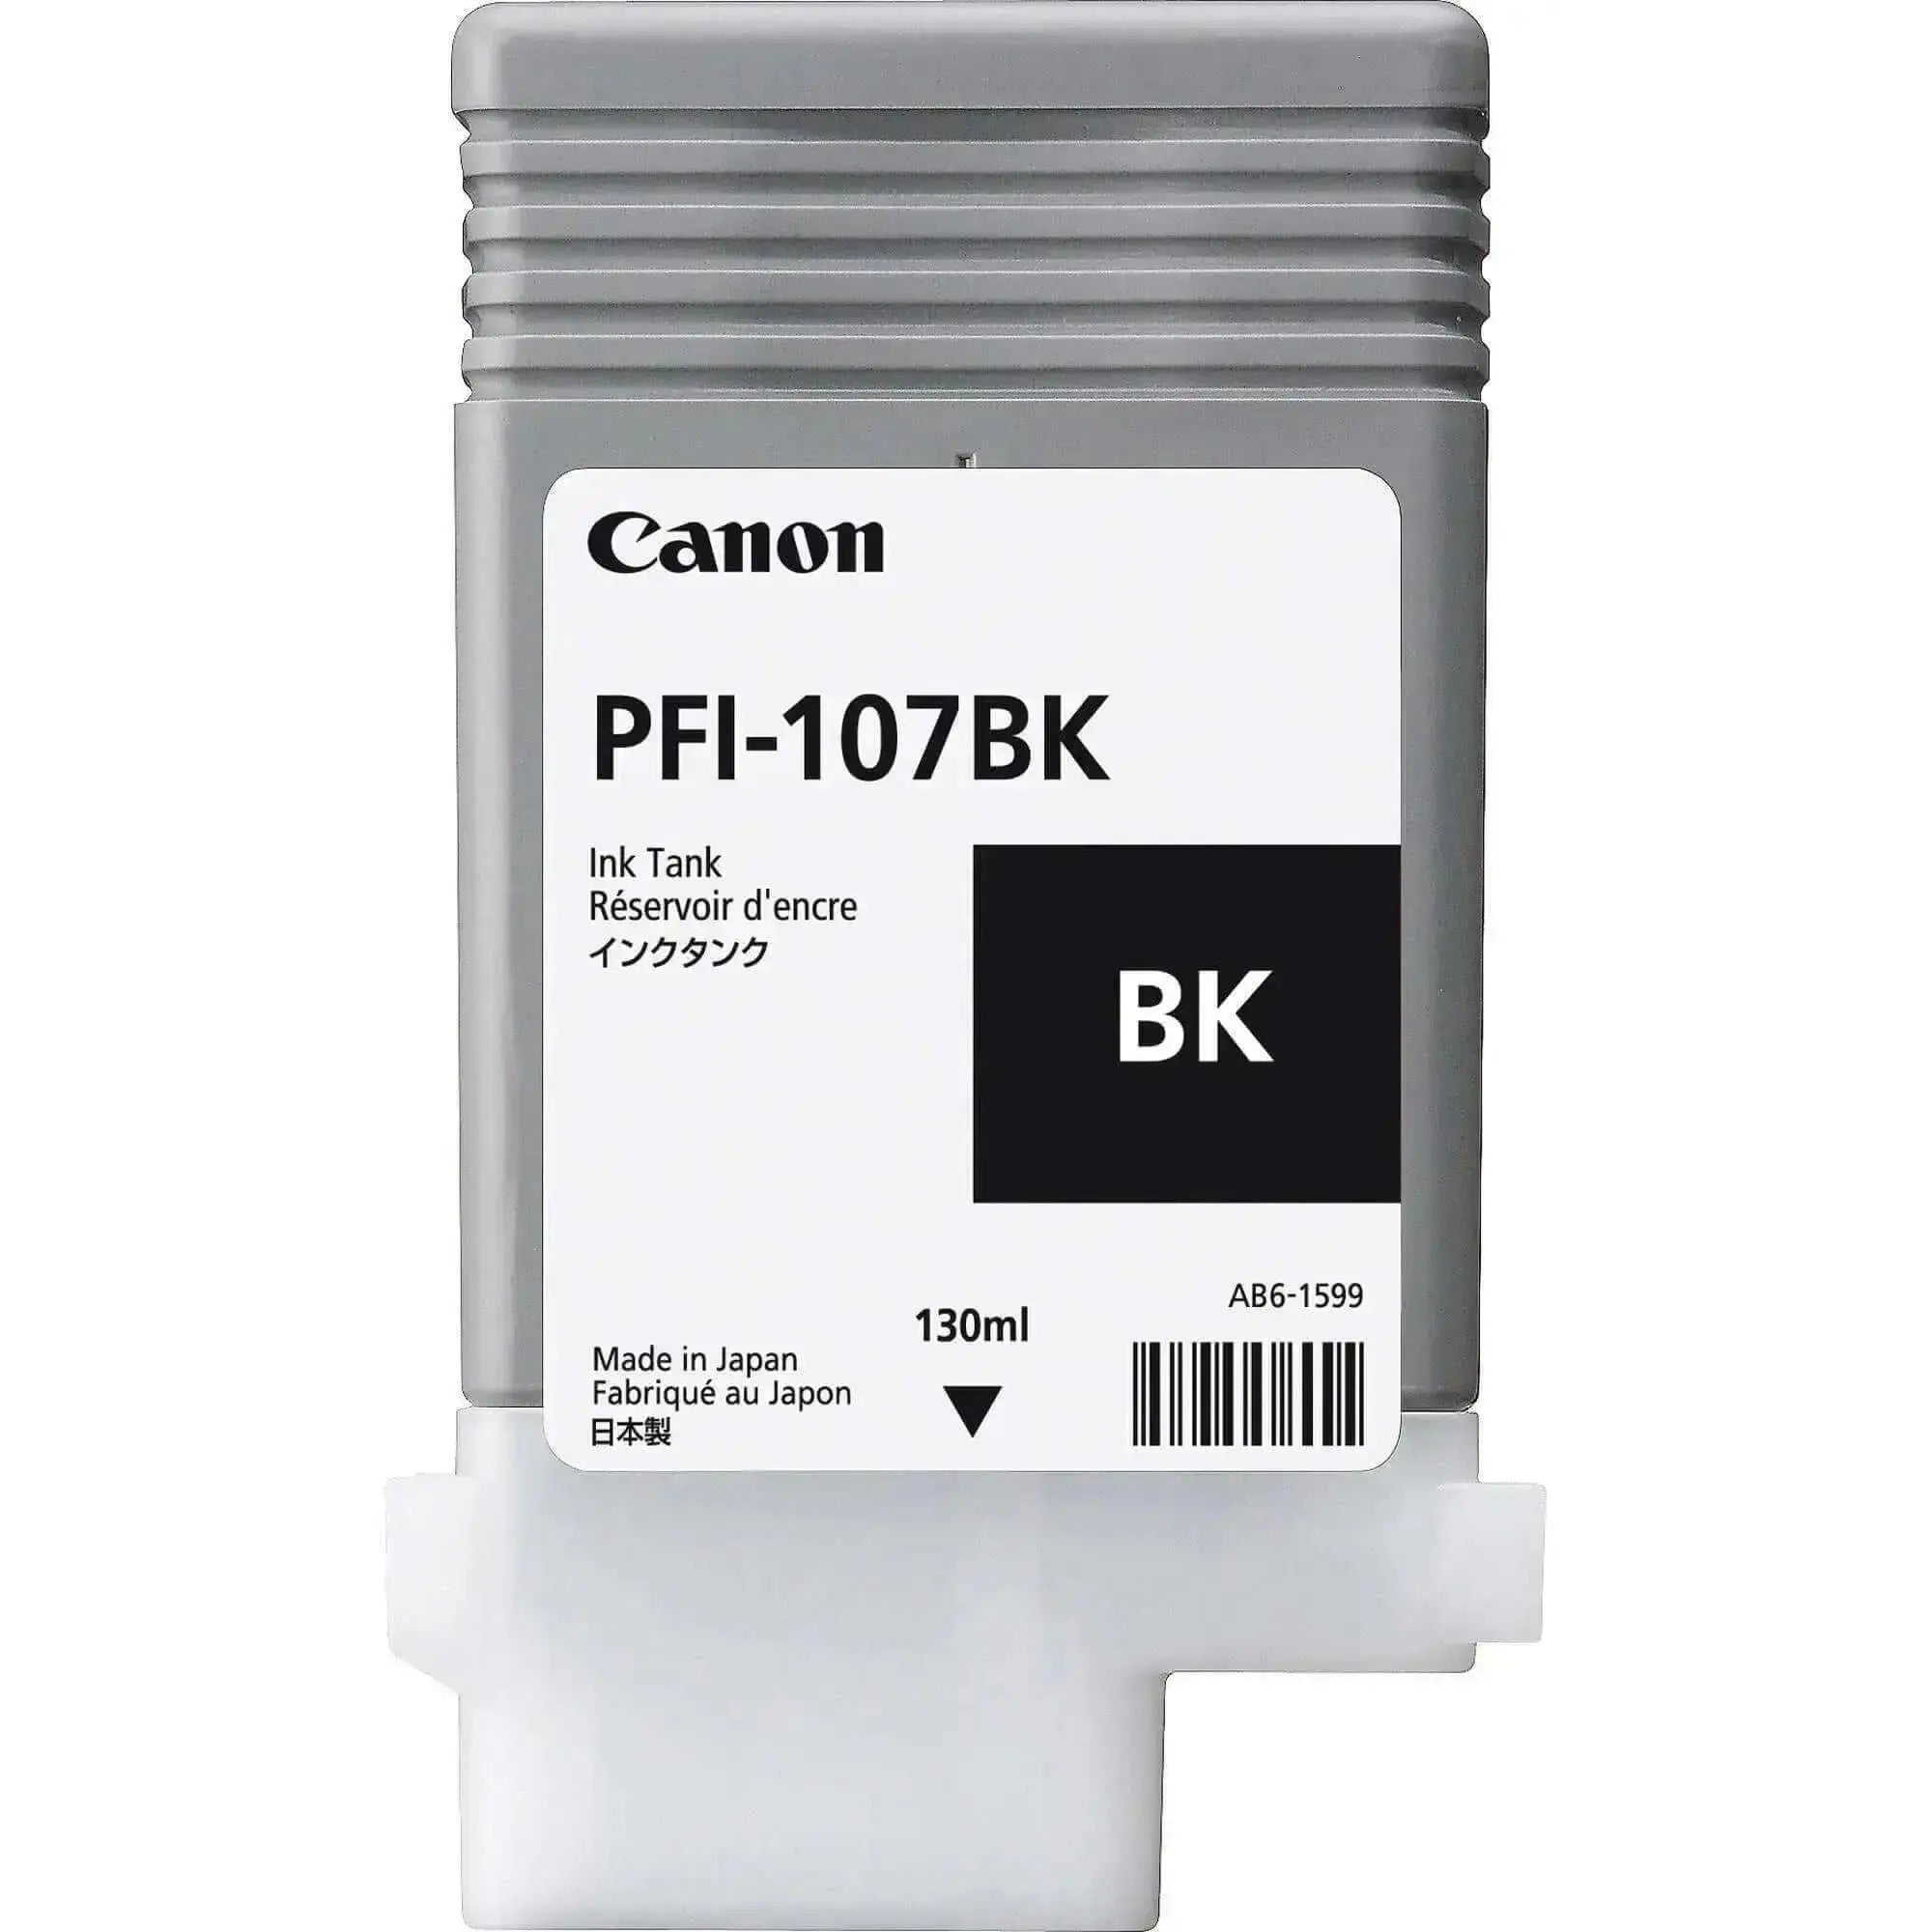 Tinta Canon Pfi-107Bk Black Ink Cartridge | Ploter